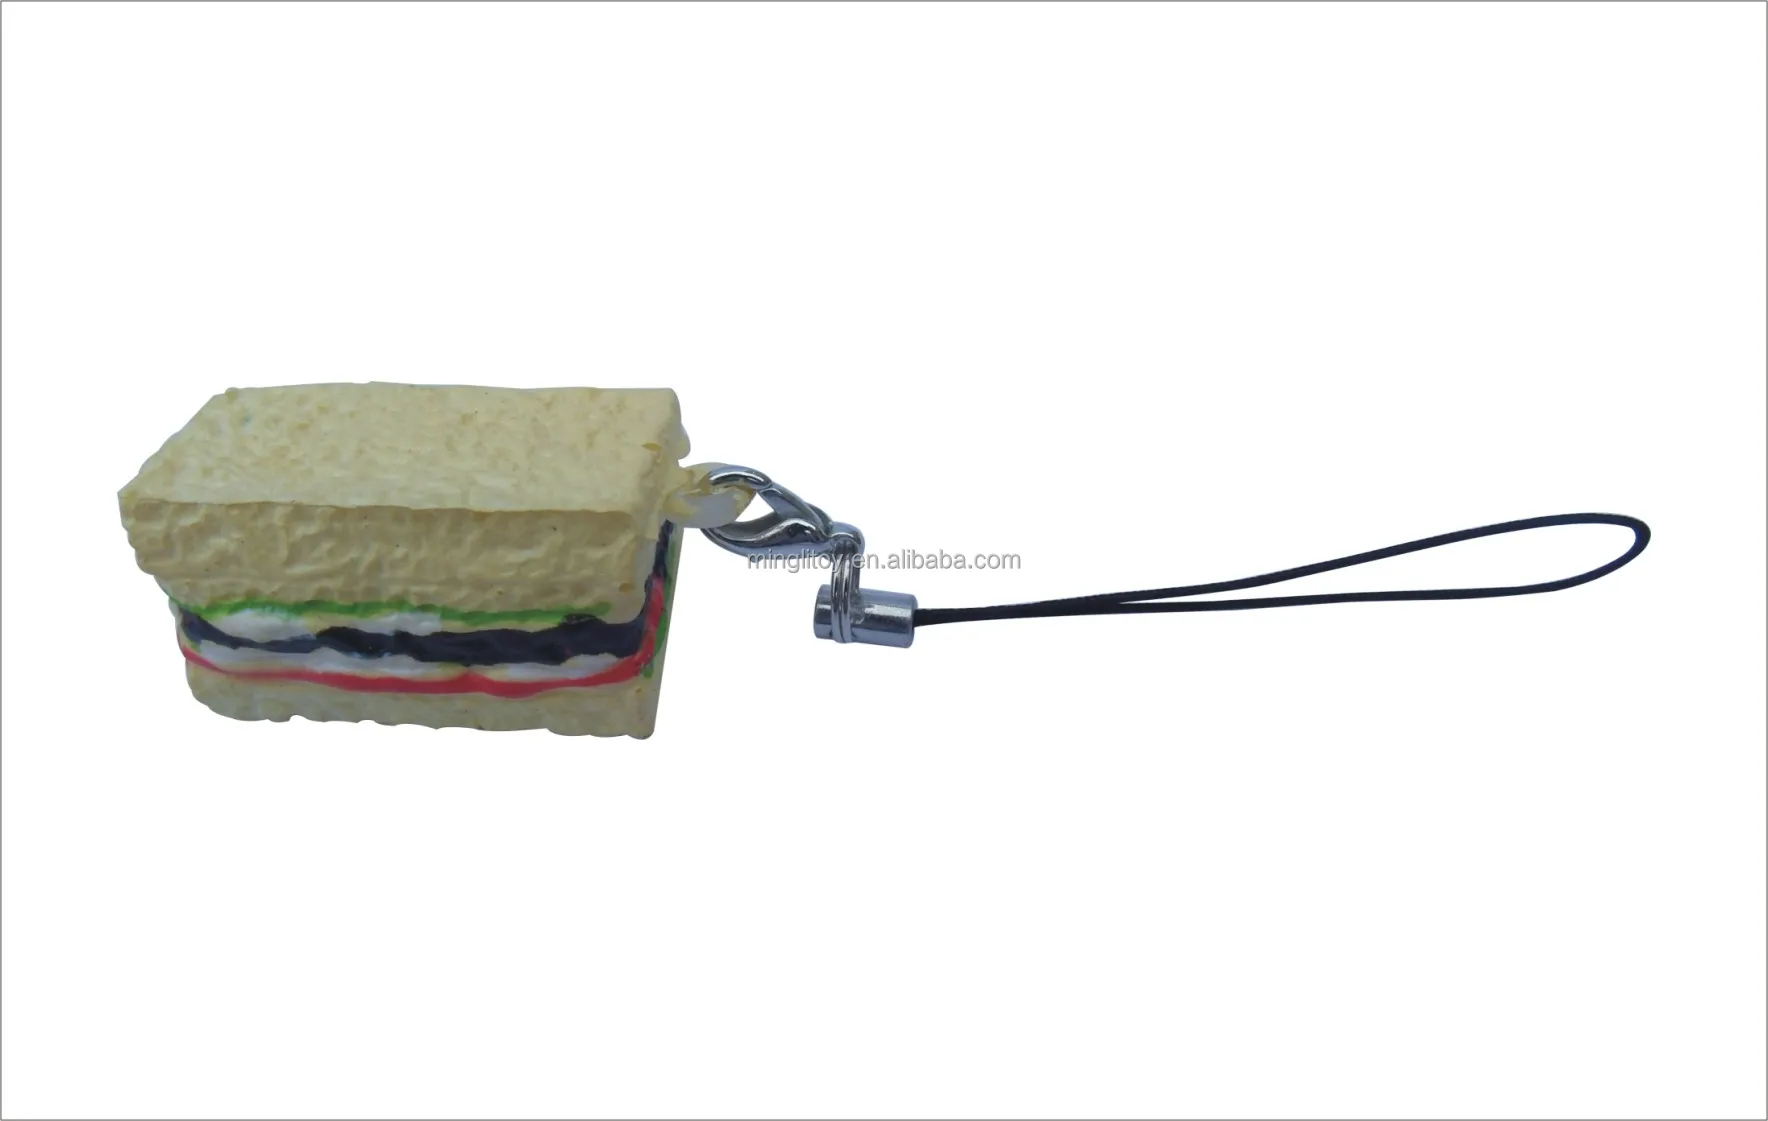 PU soft Fake bread sandwich / promotional gift keychain